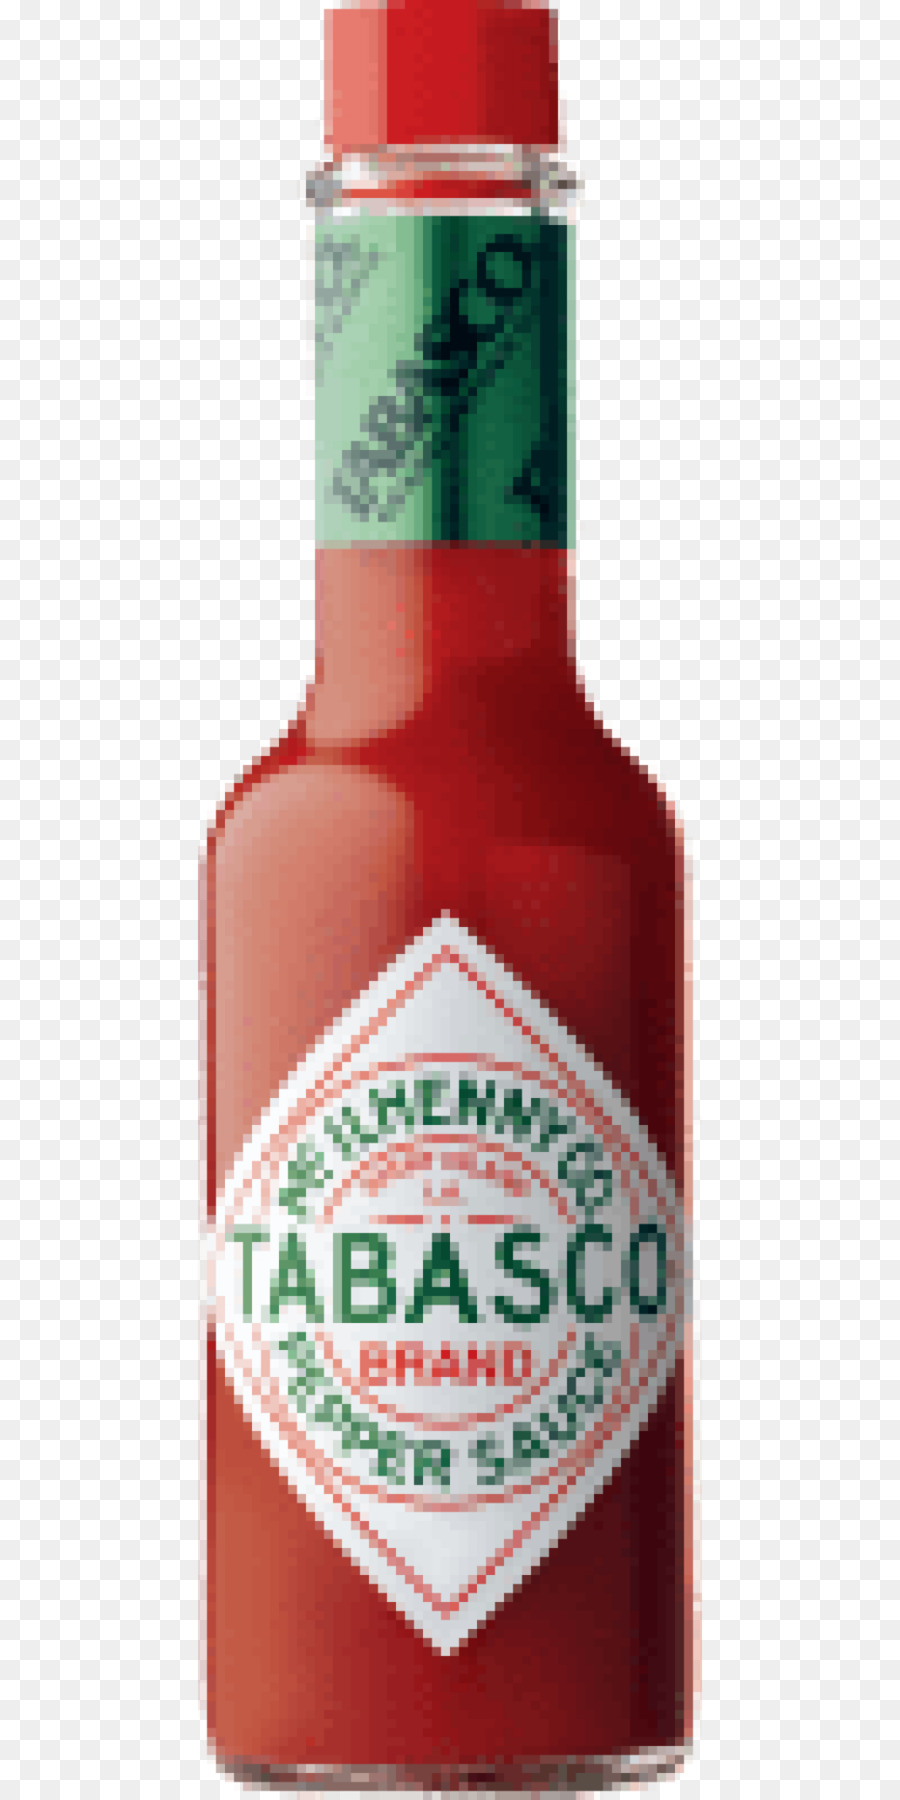 Tabasco-Pfeffer Hot Sauce Chili-Pfeffer - hot sauce Tag